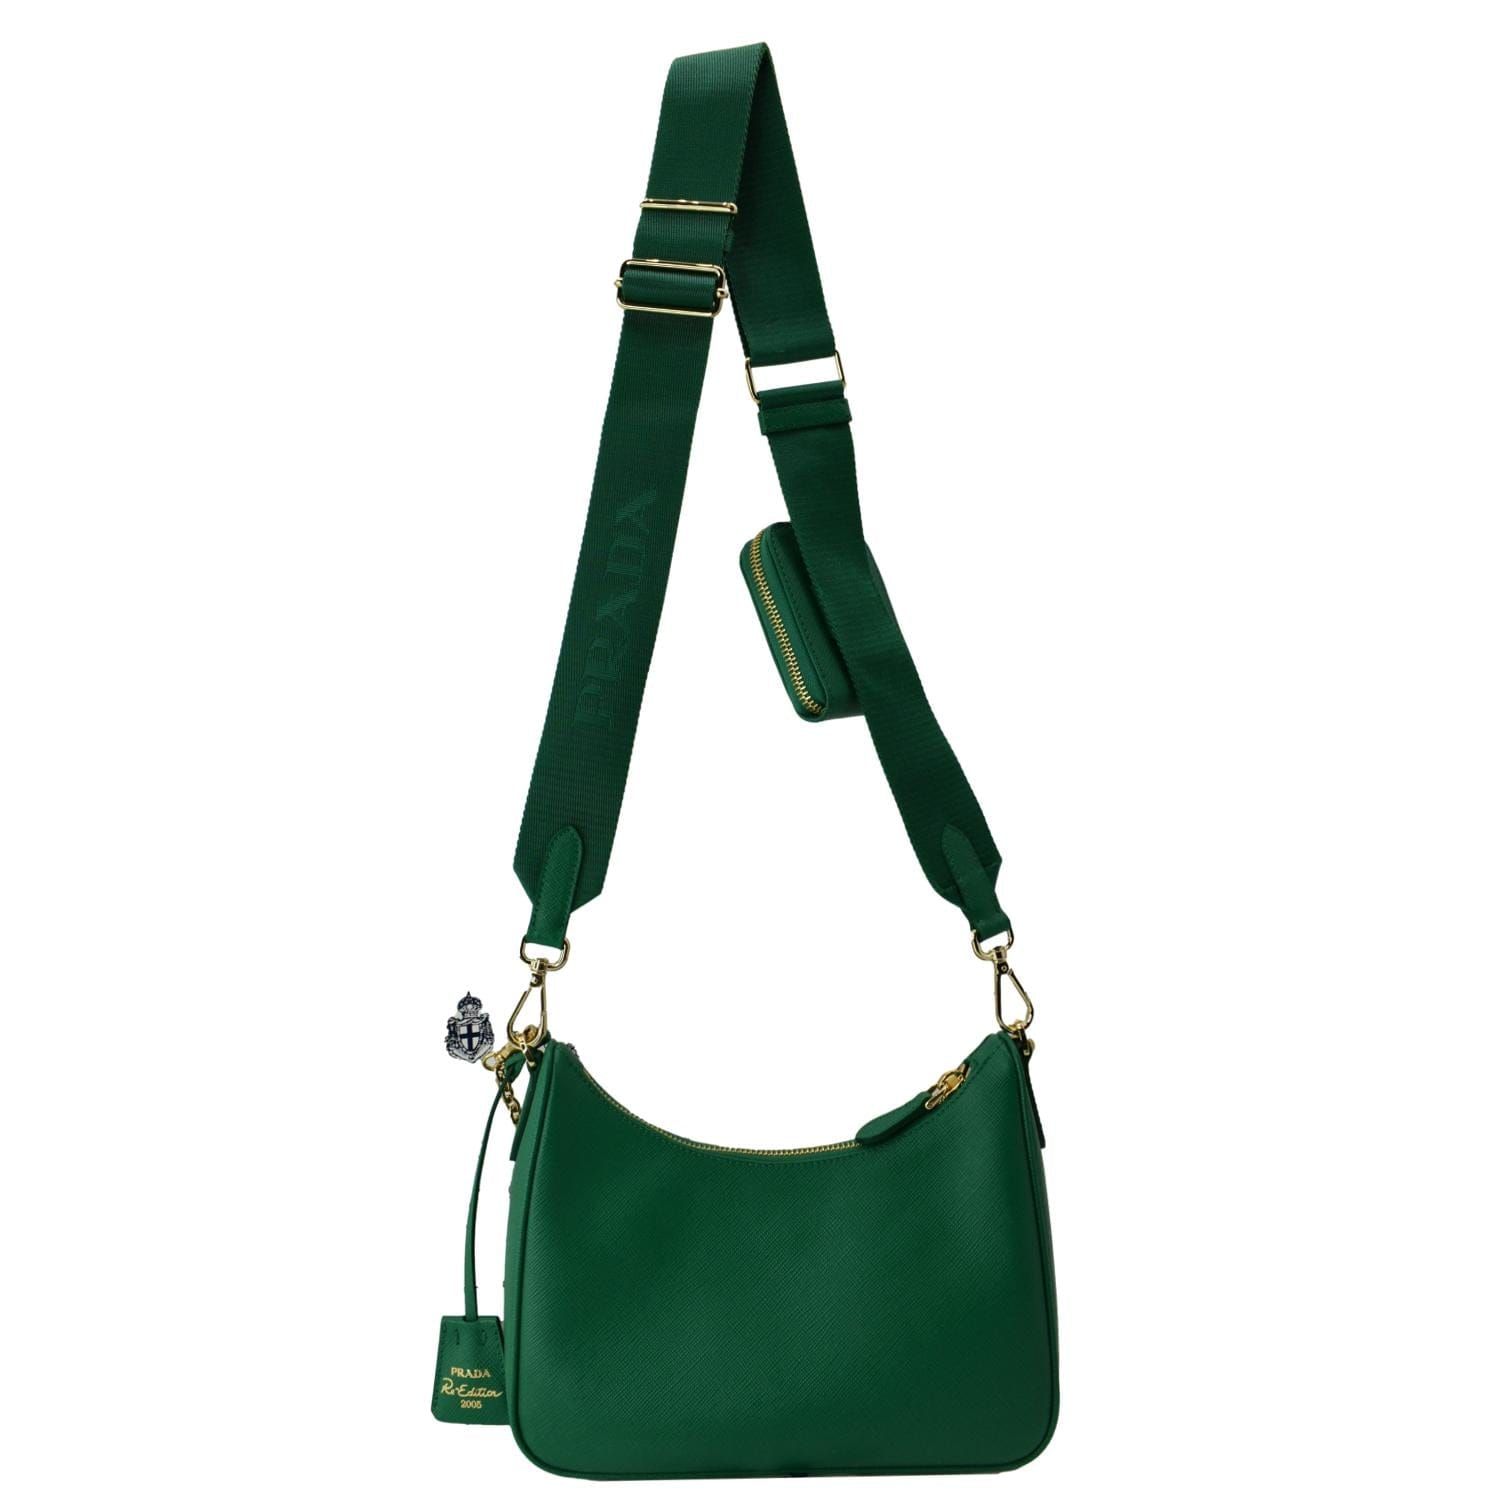 Re Edition 2005 Small Shoulder Bag in Green - Prada